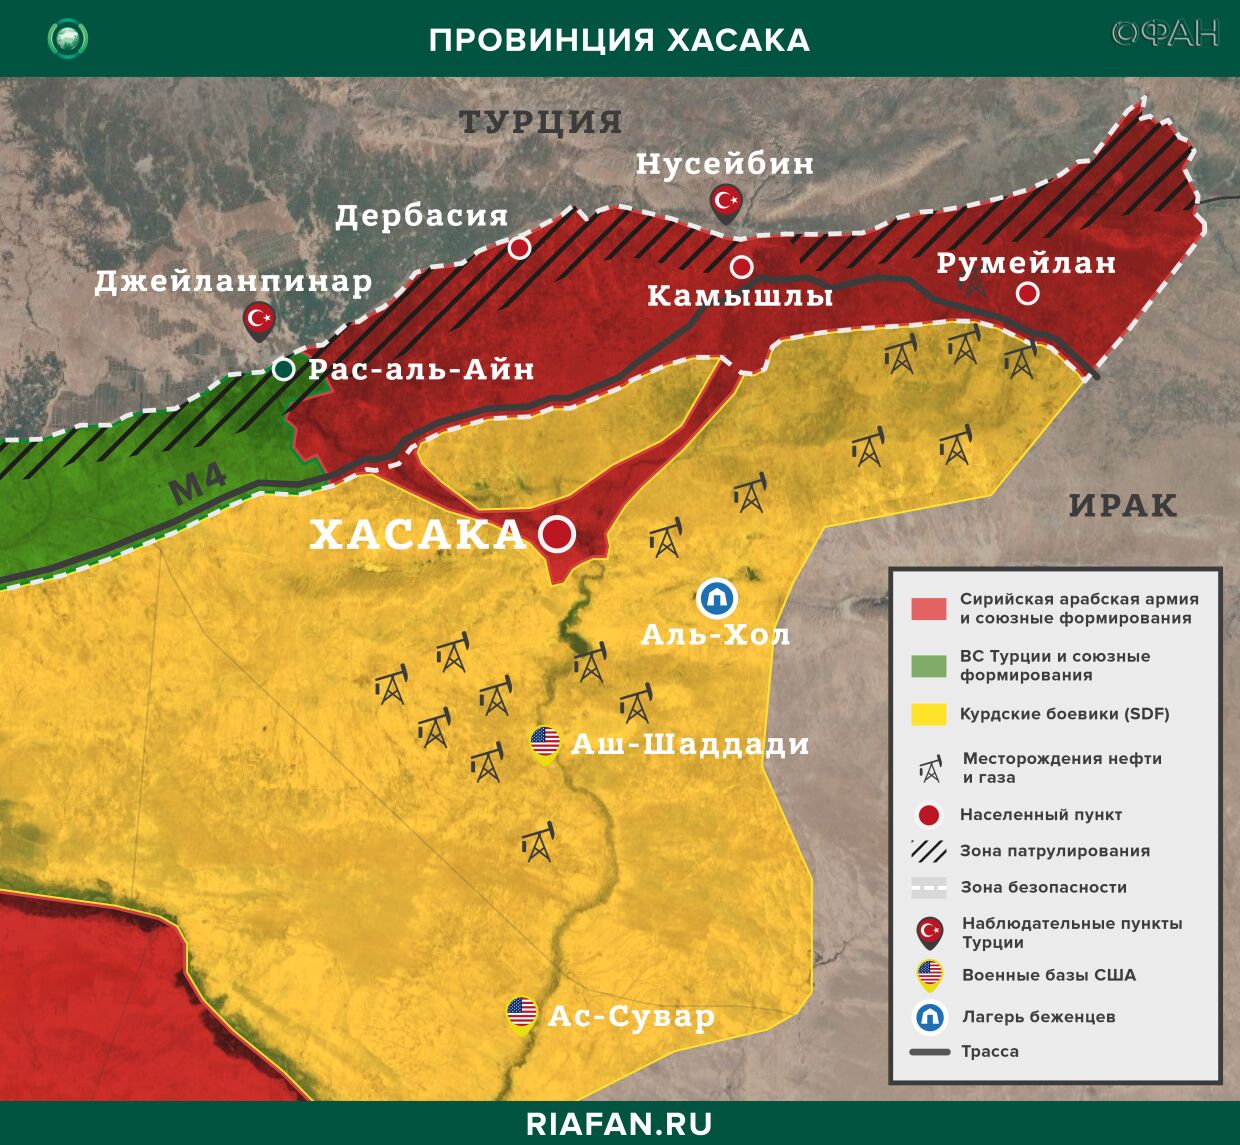 Nouvelles de Syrie 5 Septembre 16.30: взрыв на складе с боеприпасами произошел в городе Азаз